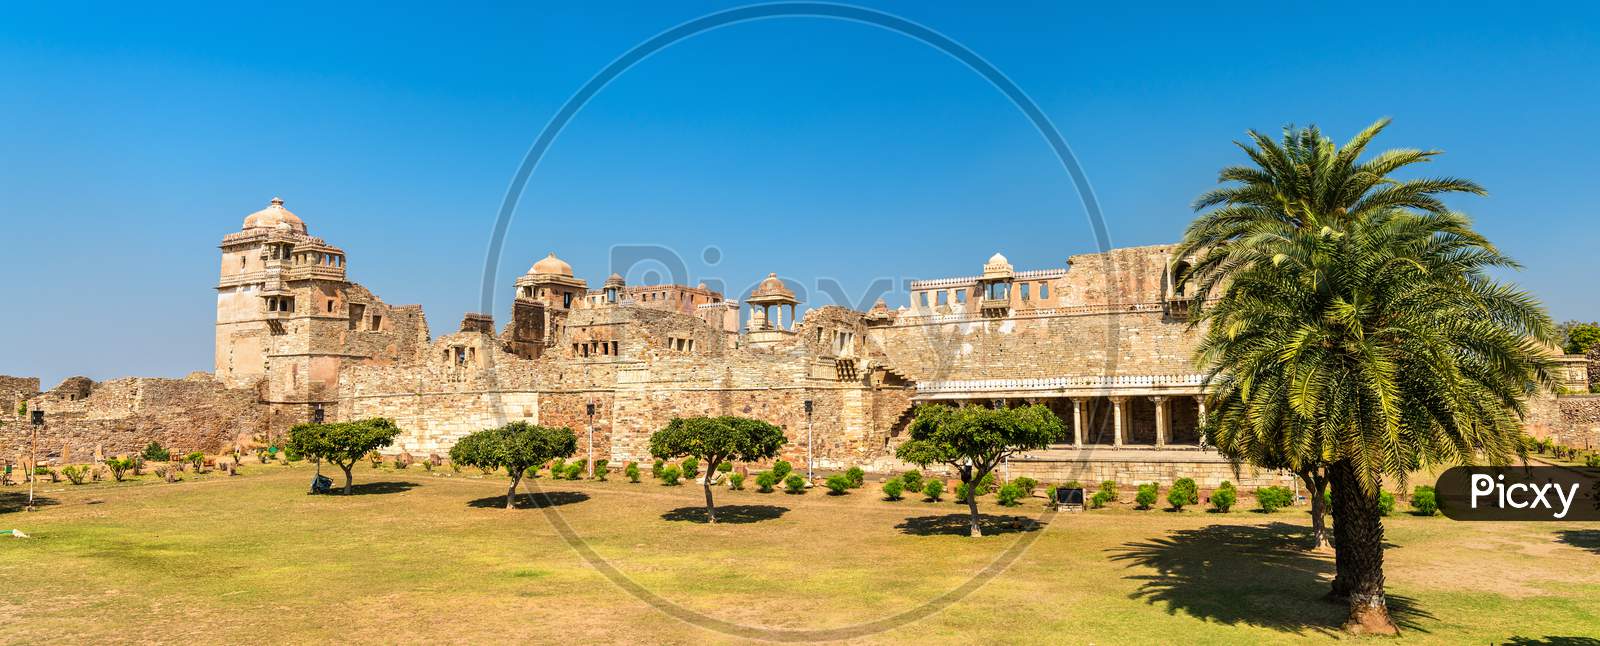 Rana Kumbha Palace, The Oldest Monument At Chittorgarh Fort - Rajastan, India